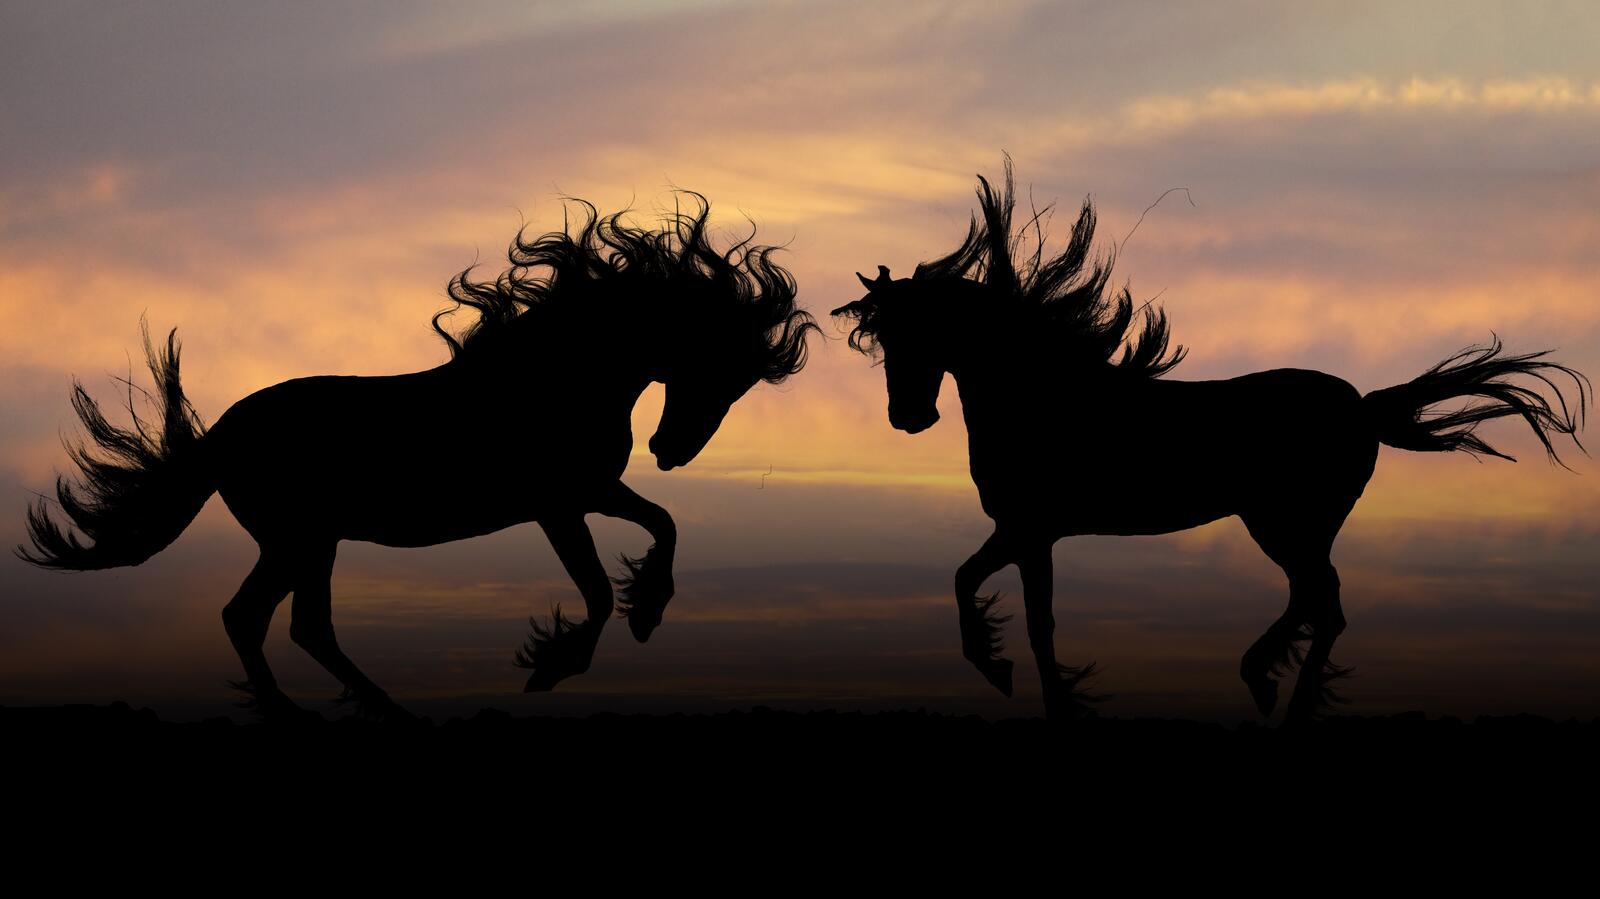 Бесплатное фото Силуэт двух коней на закате дня